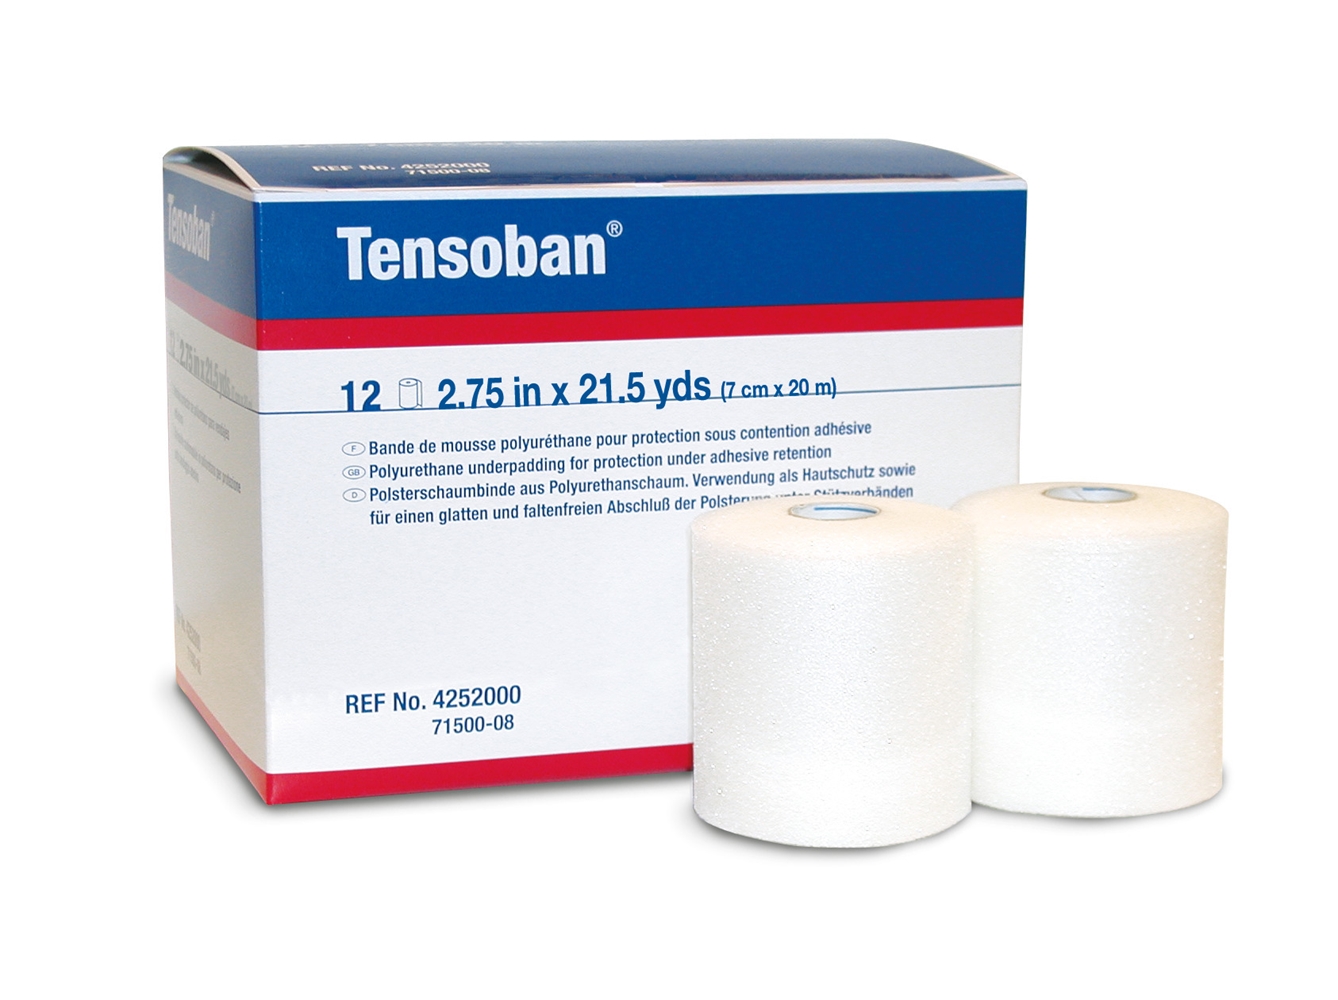 Underlagsbinda Tensoban - 7cmx20m - 12 st